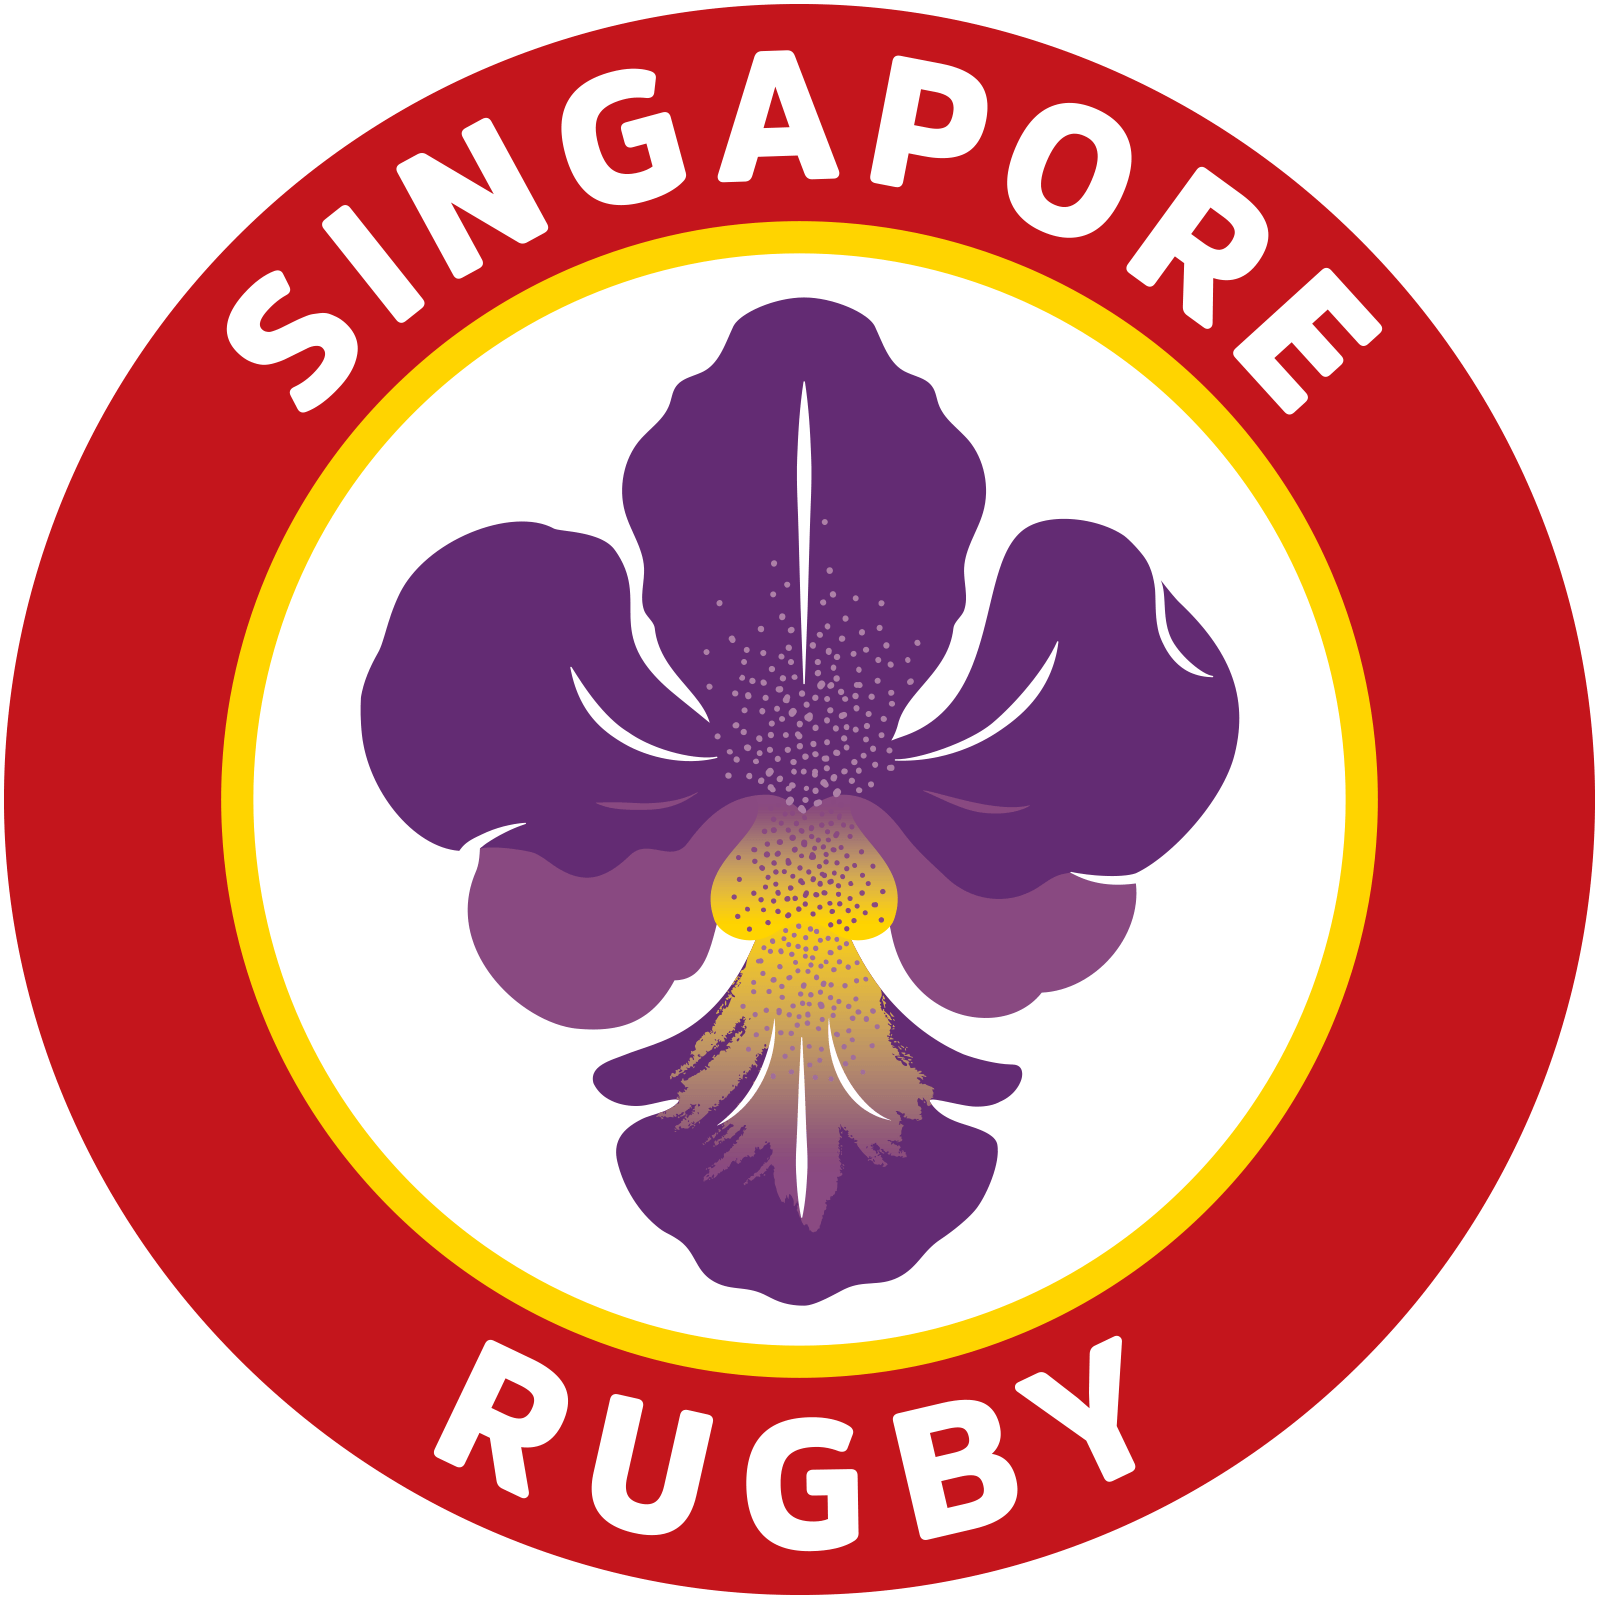 Singapore Logo - Singapore Rugby Union